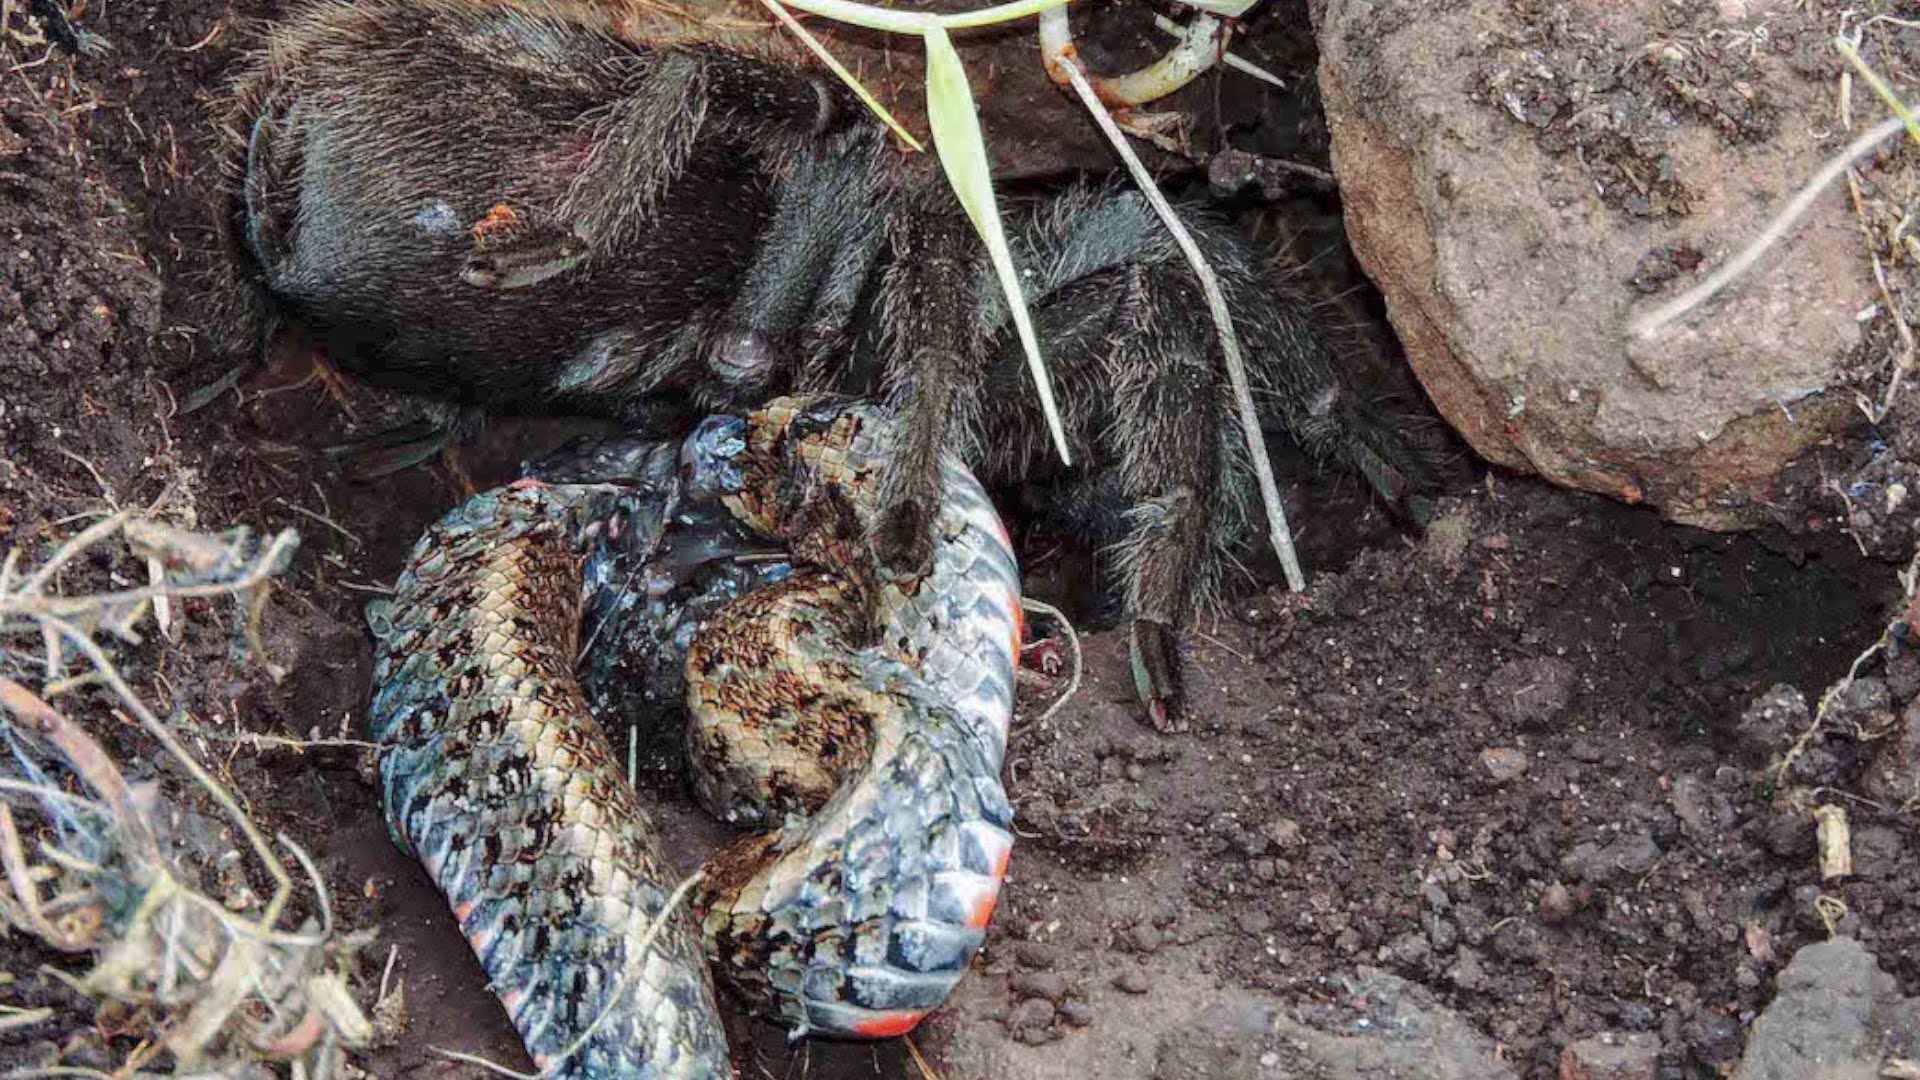 Giant Wild Tarantula Feasting on A Snake Is the Stuff of Nightmares ...